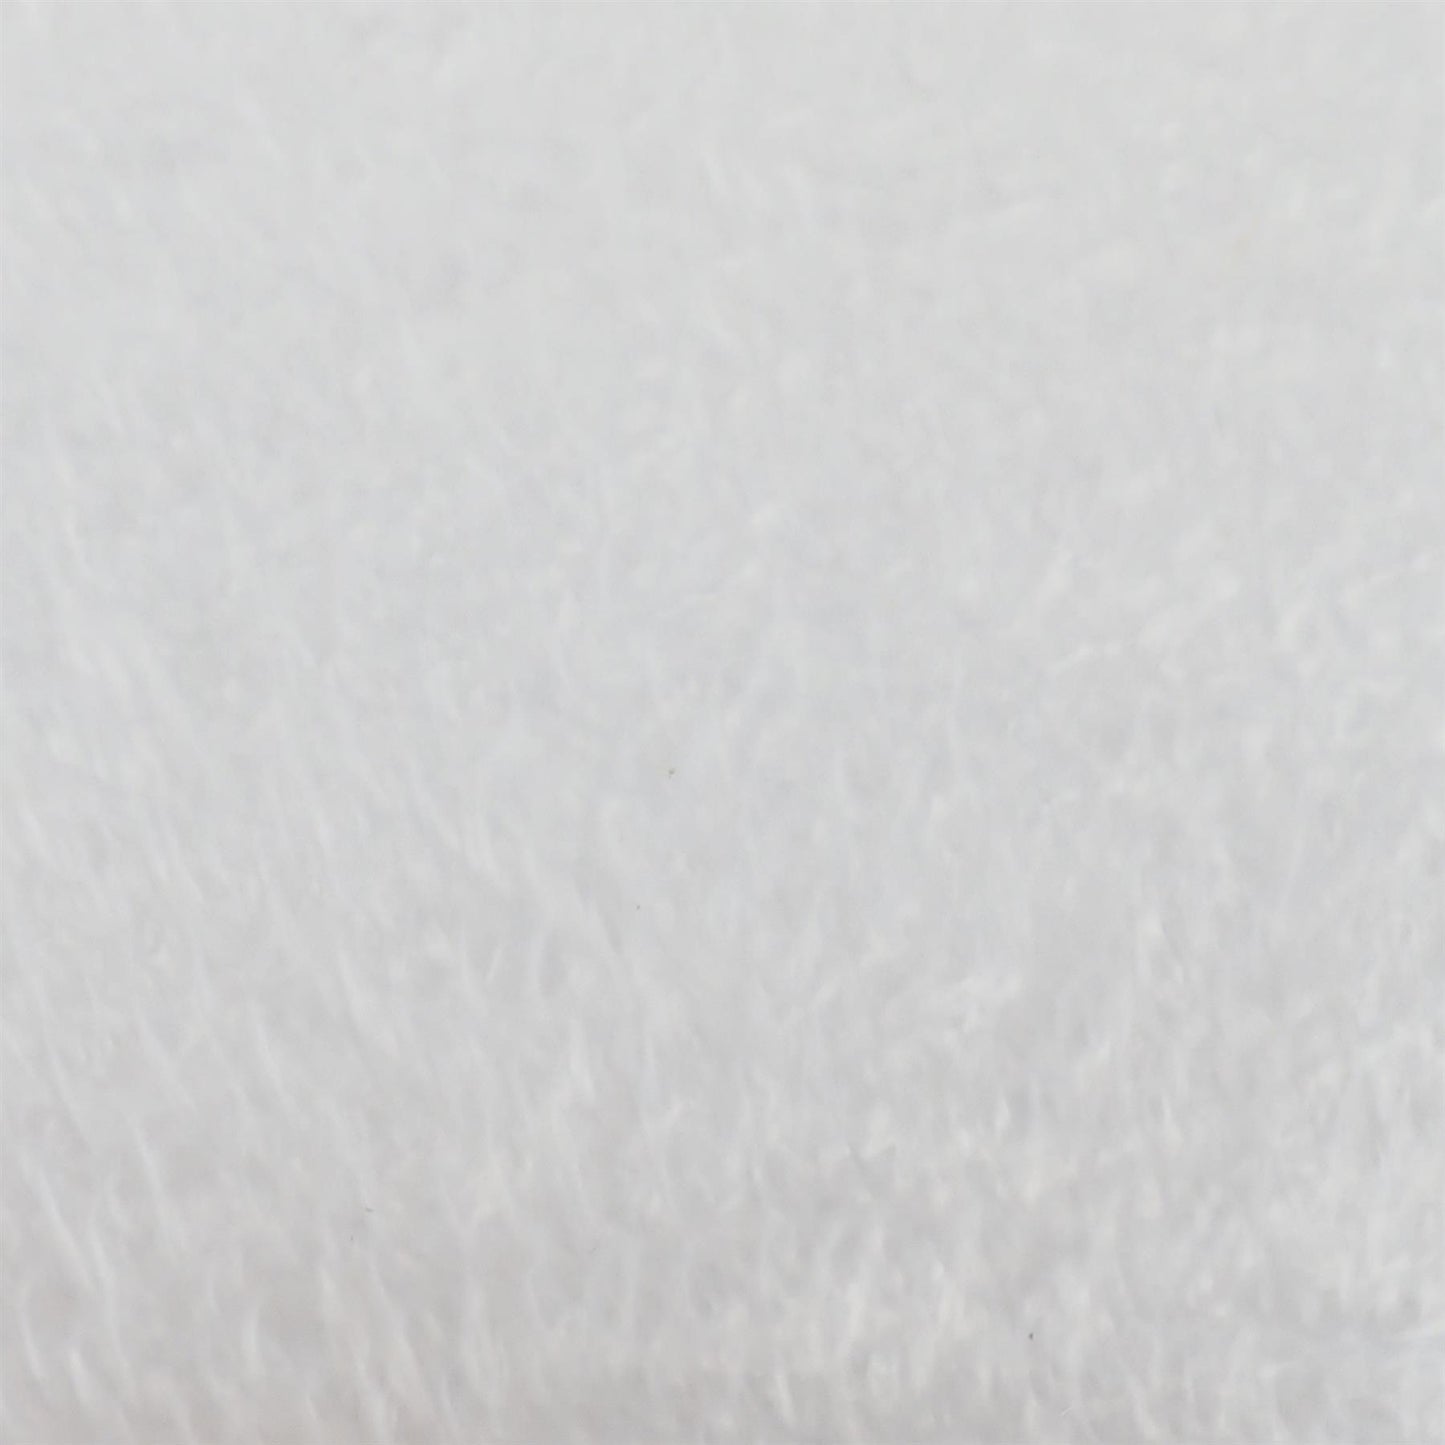 Incudo White Lava Pearl Acrylic Sheet - 300x200x3mm (11.8x7.87x0.12")